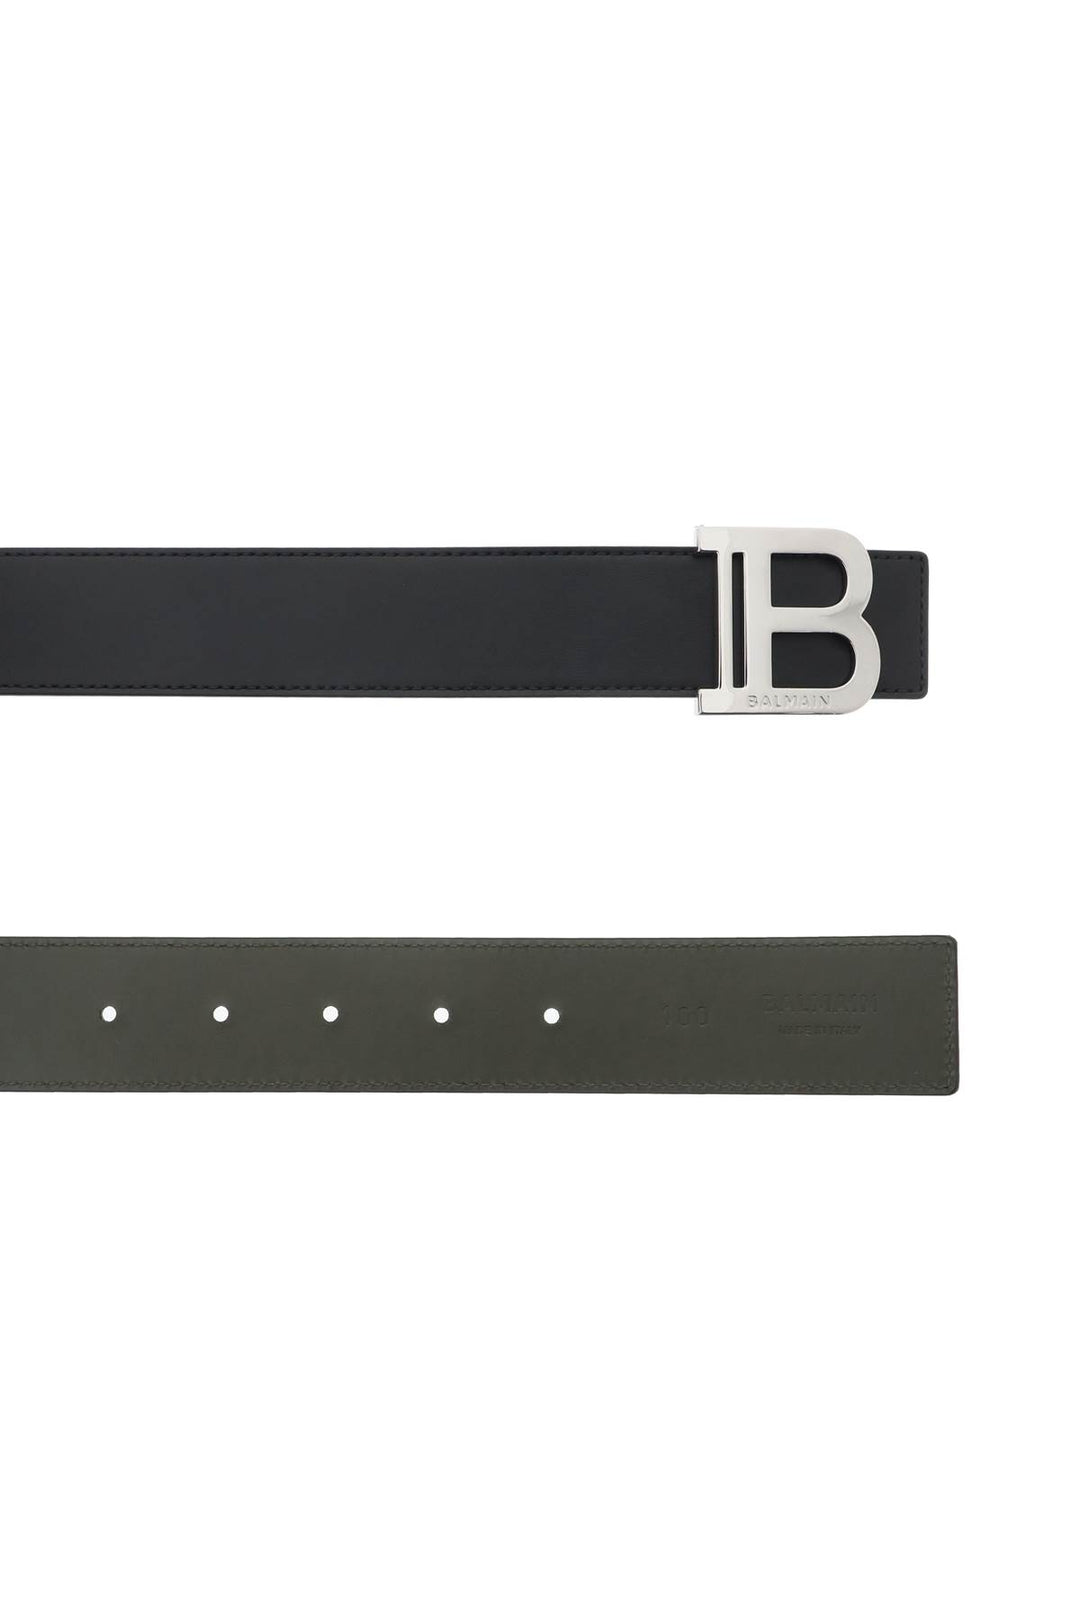 Balmain Reversibile B Belt   Black